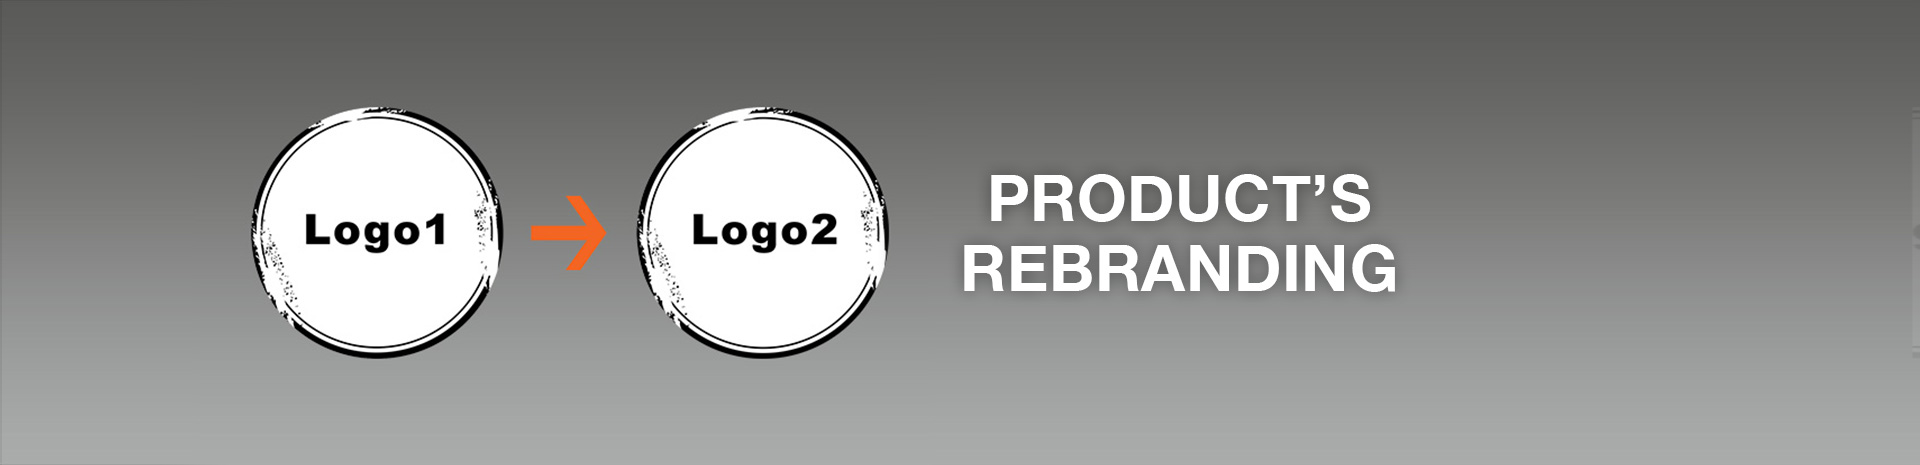 Product’s rebranding